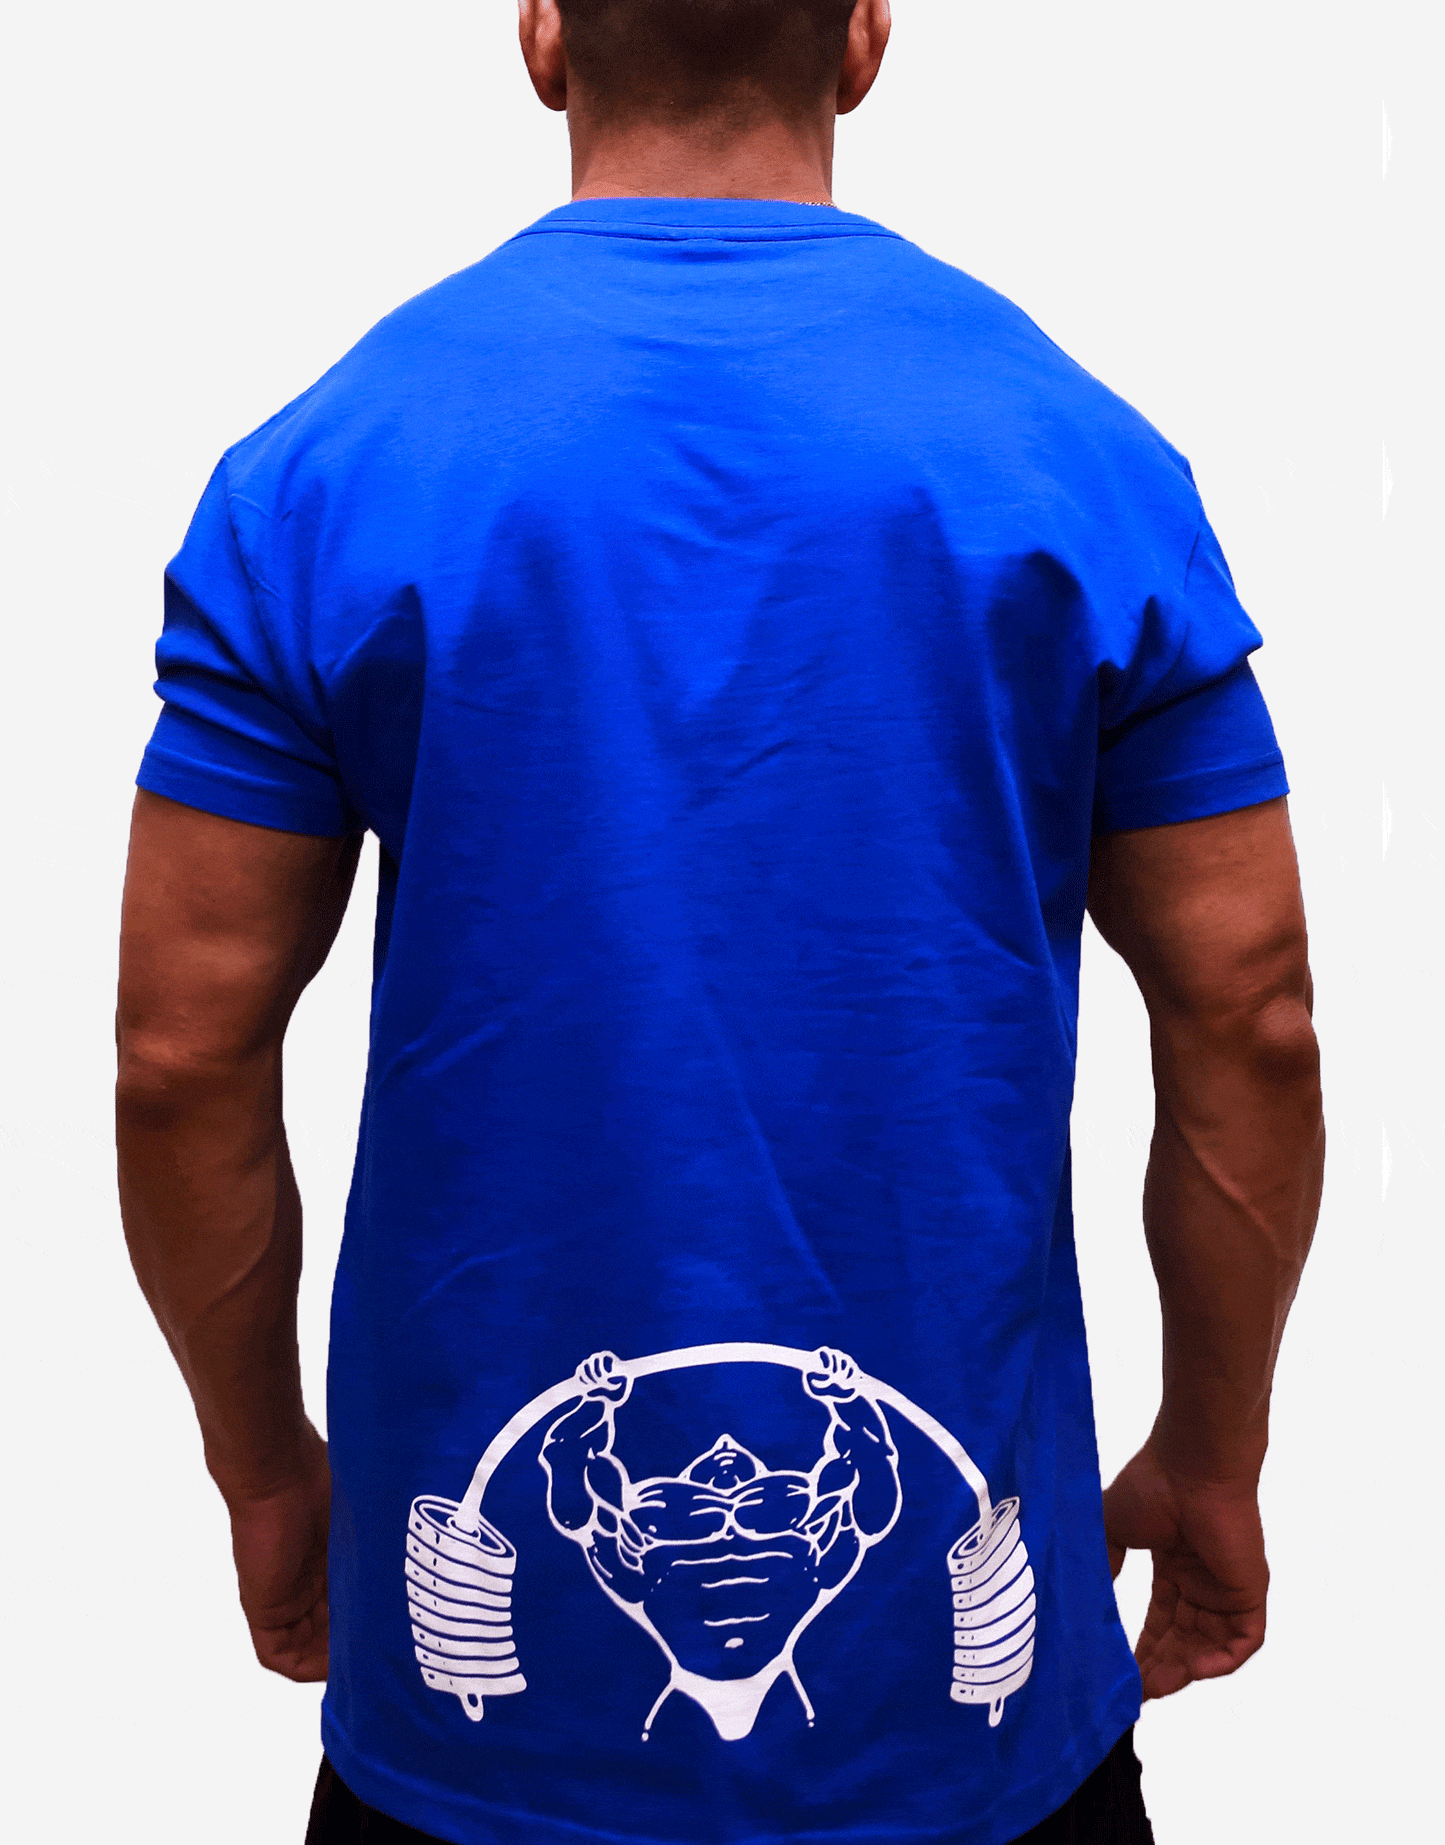 Powerhouse Gym Pro Shop Block T-Shirt Royal Blue/Black